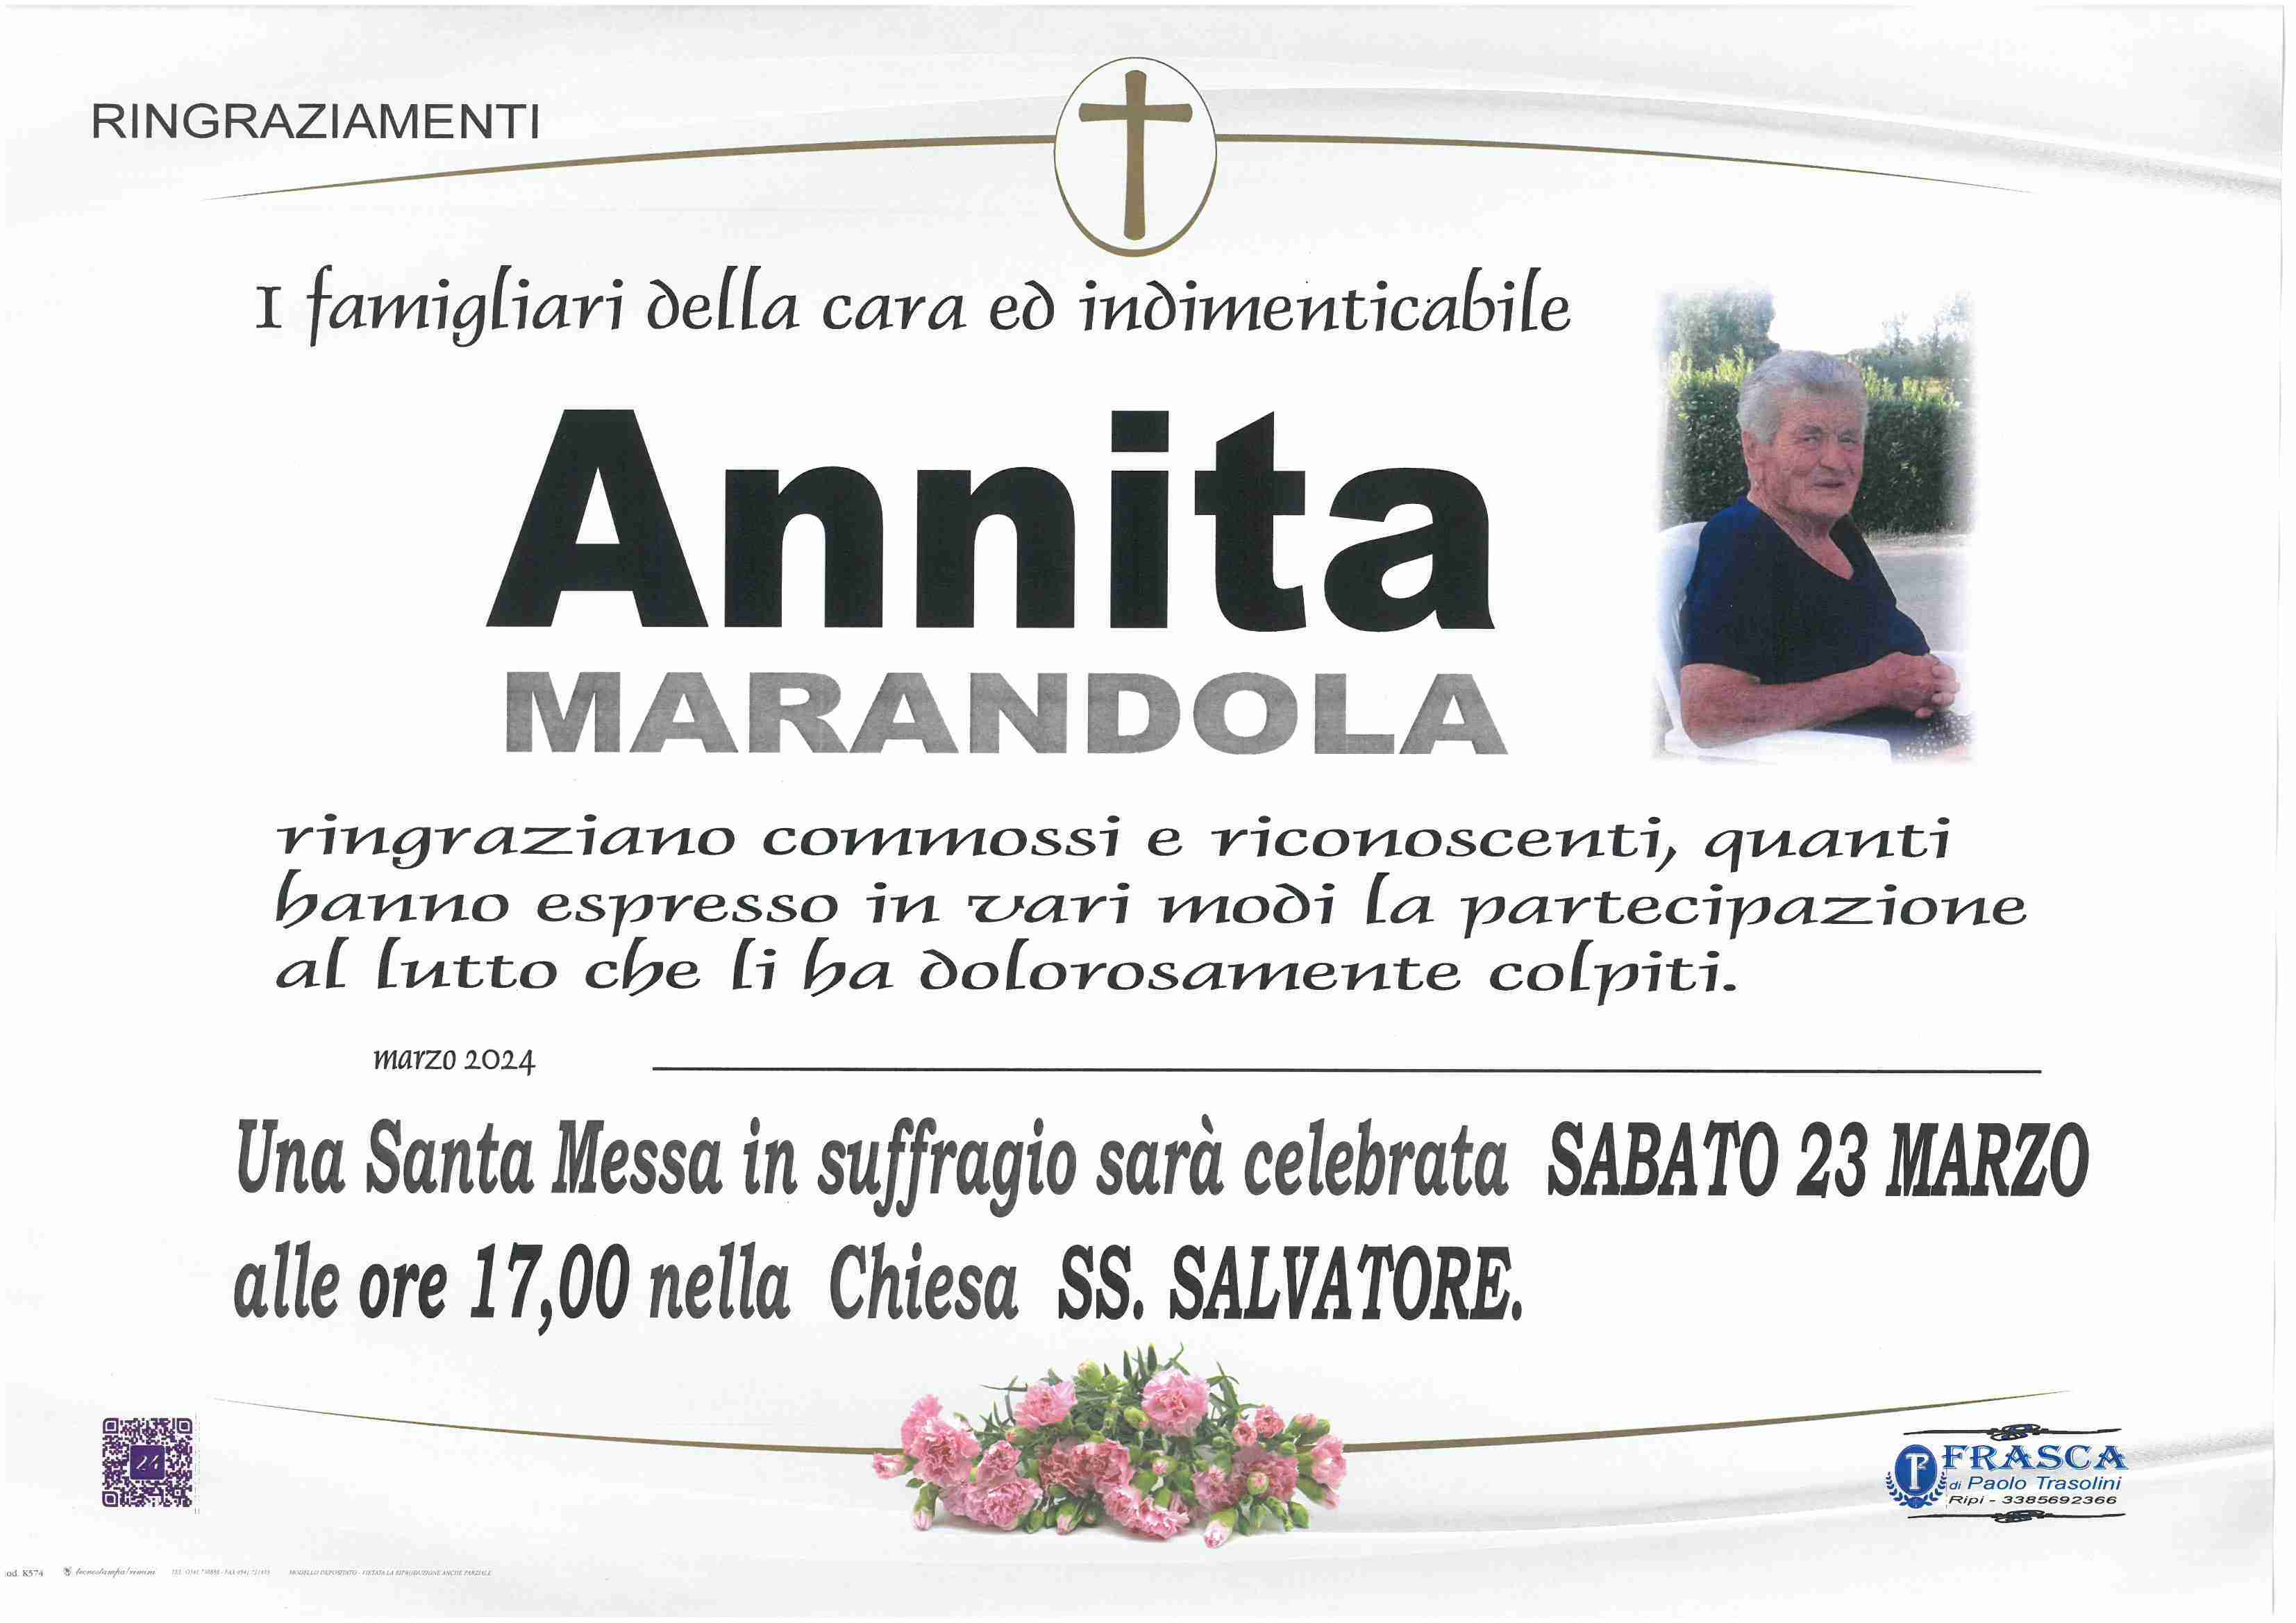 Annita Marandola